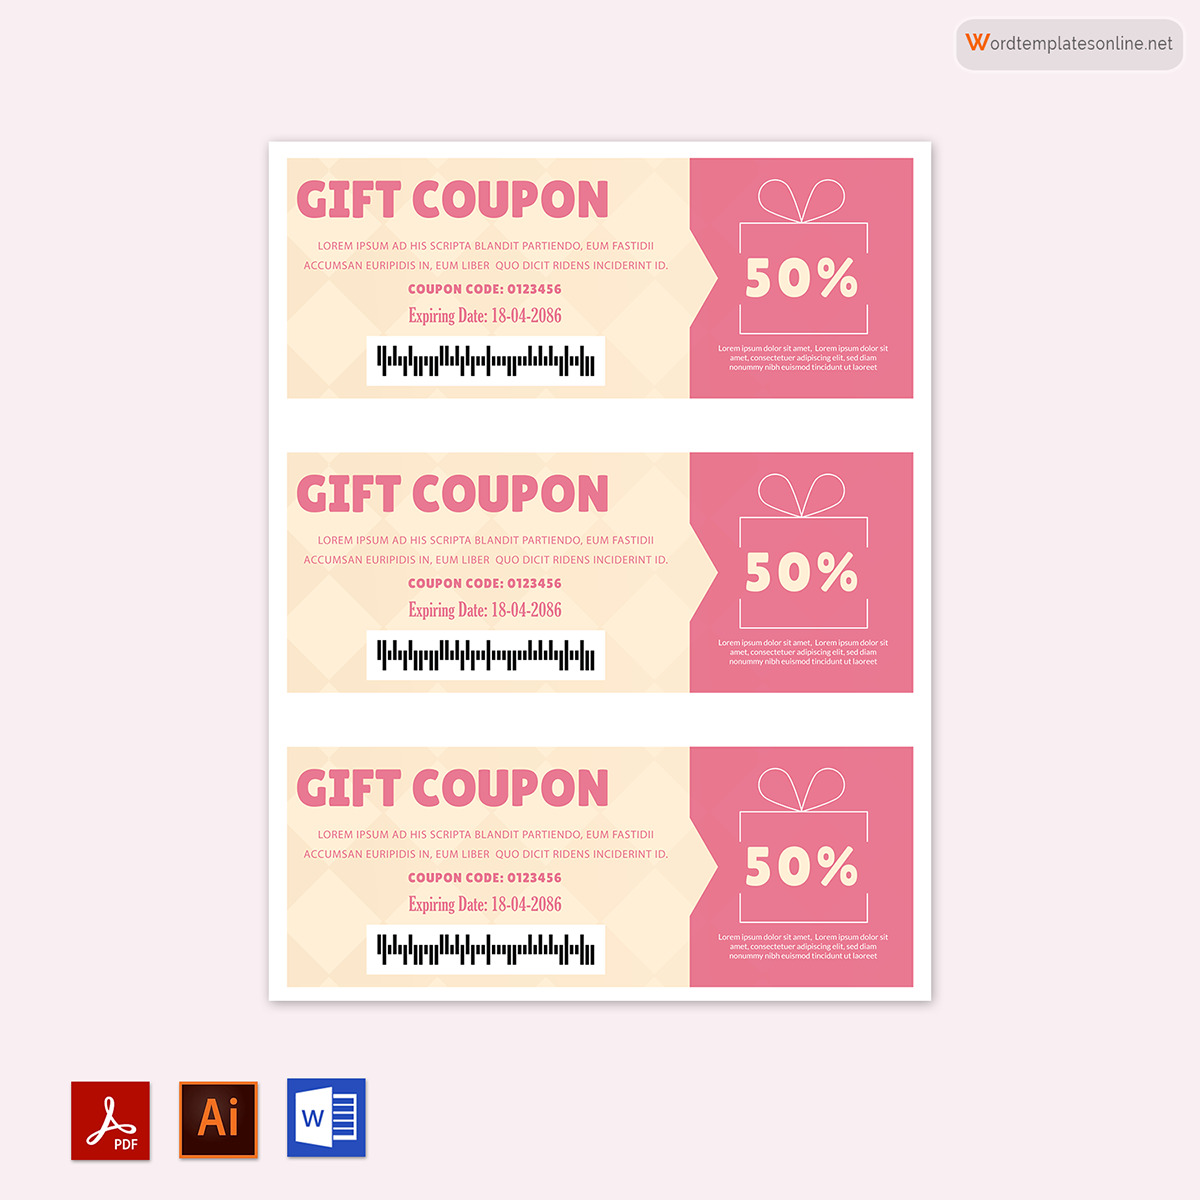 Printable gift coupon example Word